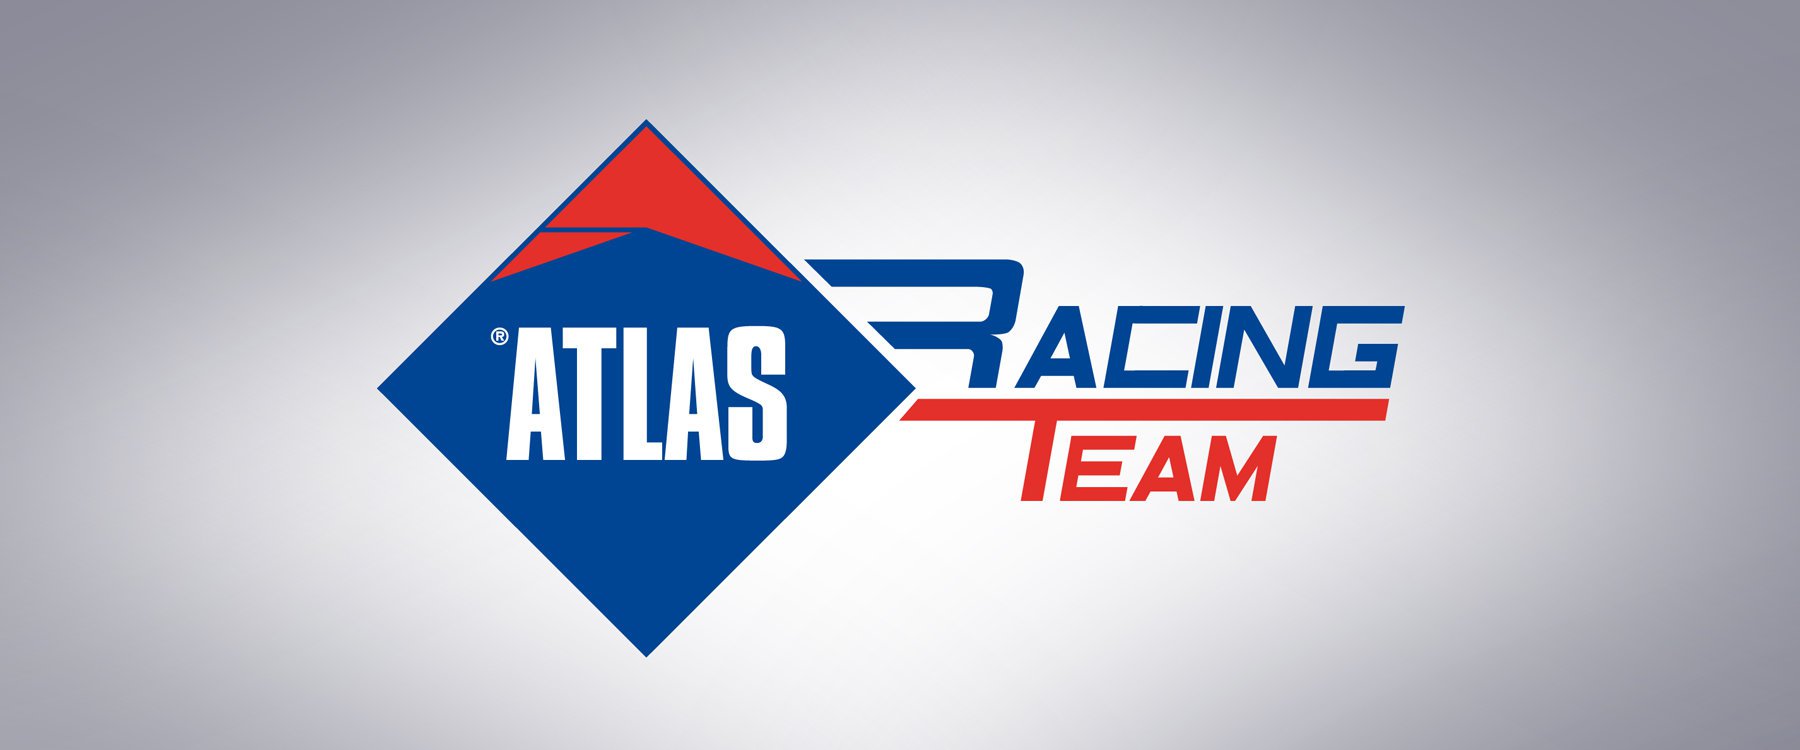 Atlas Racing Team #1